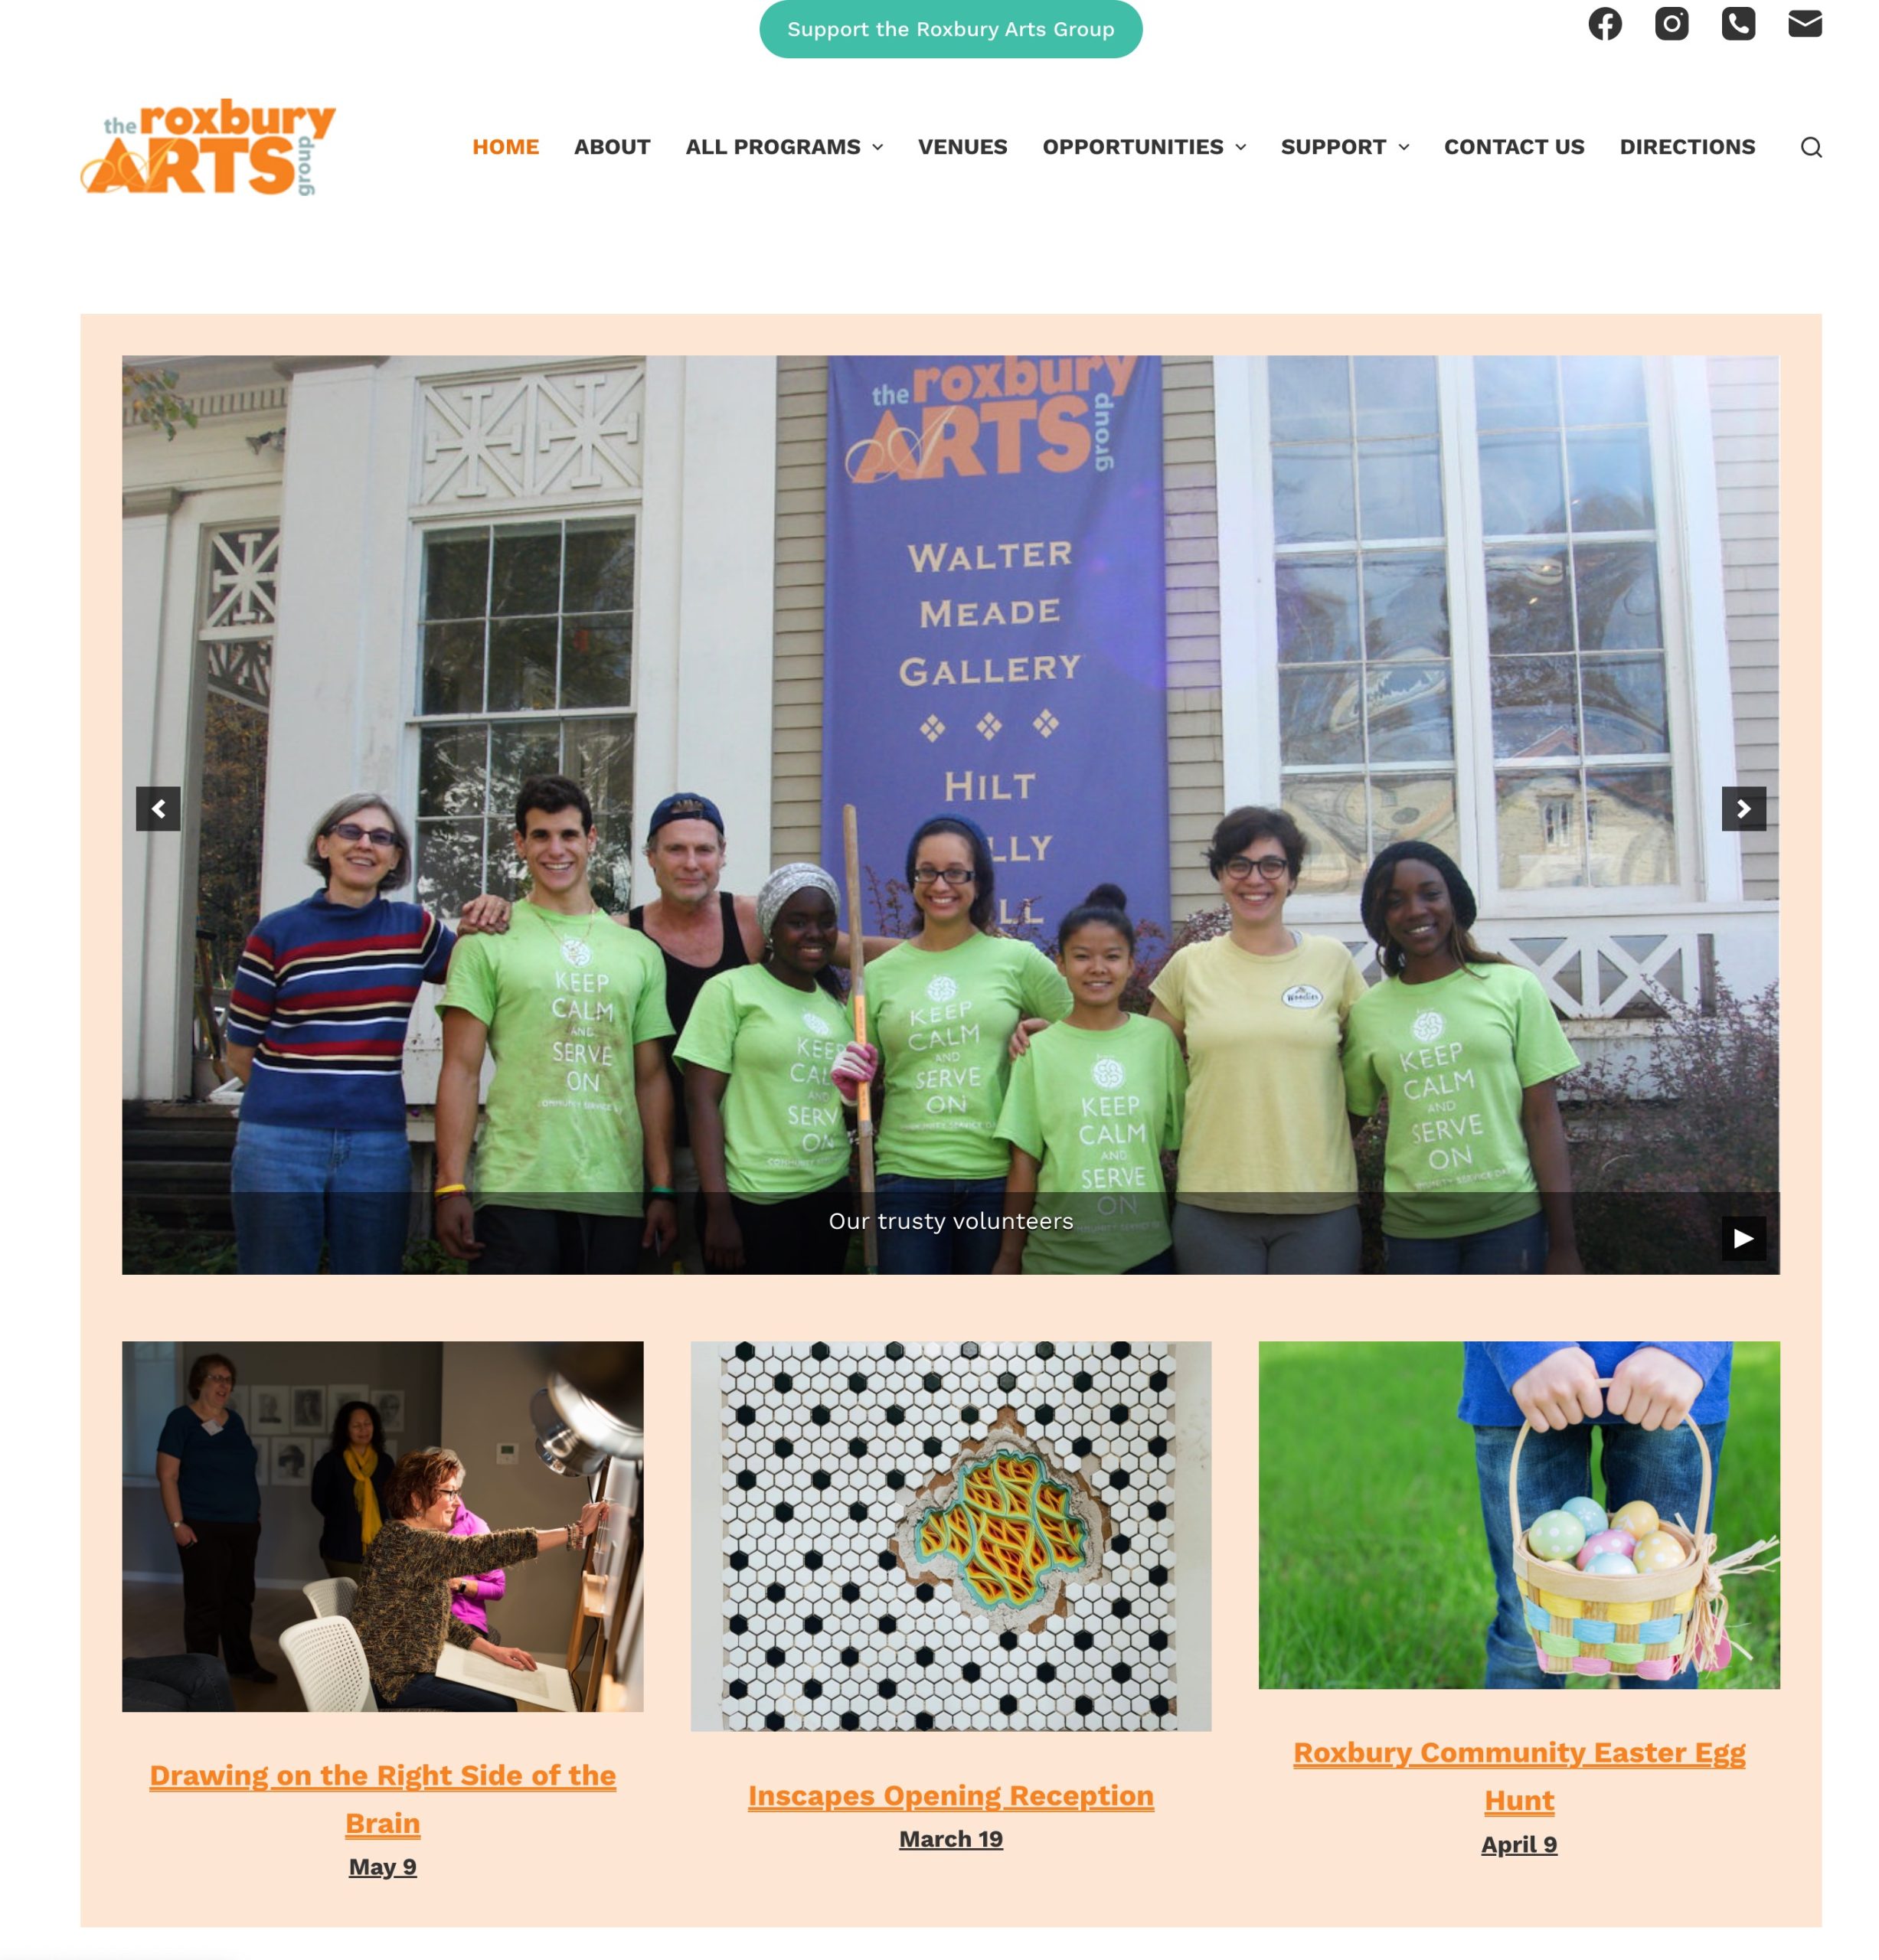 A website for the Roxbury Arts Group.
Visit website roxburyartsgroup.org